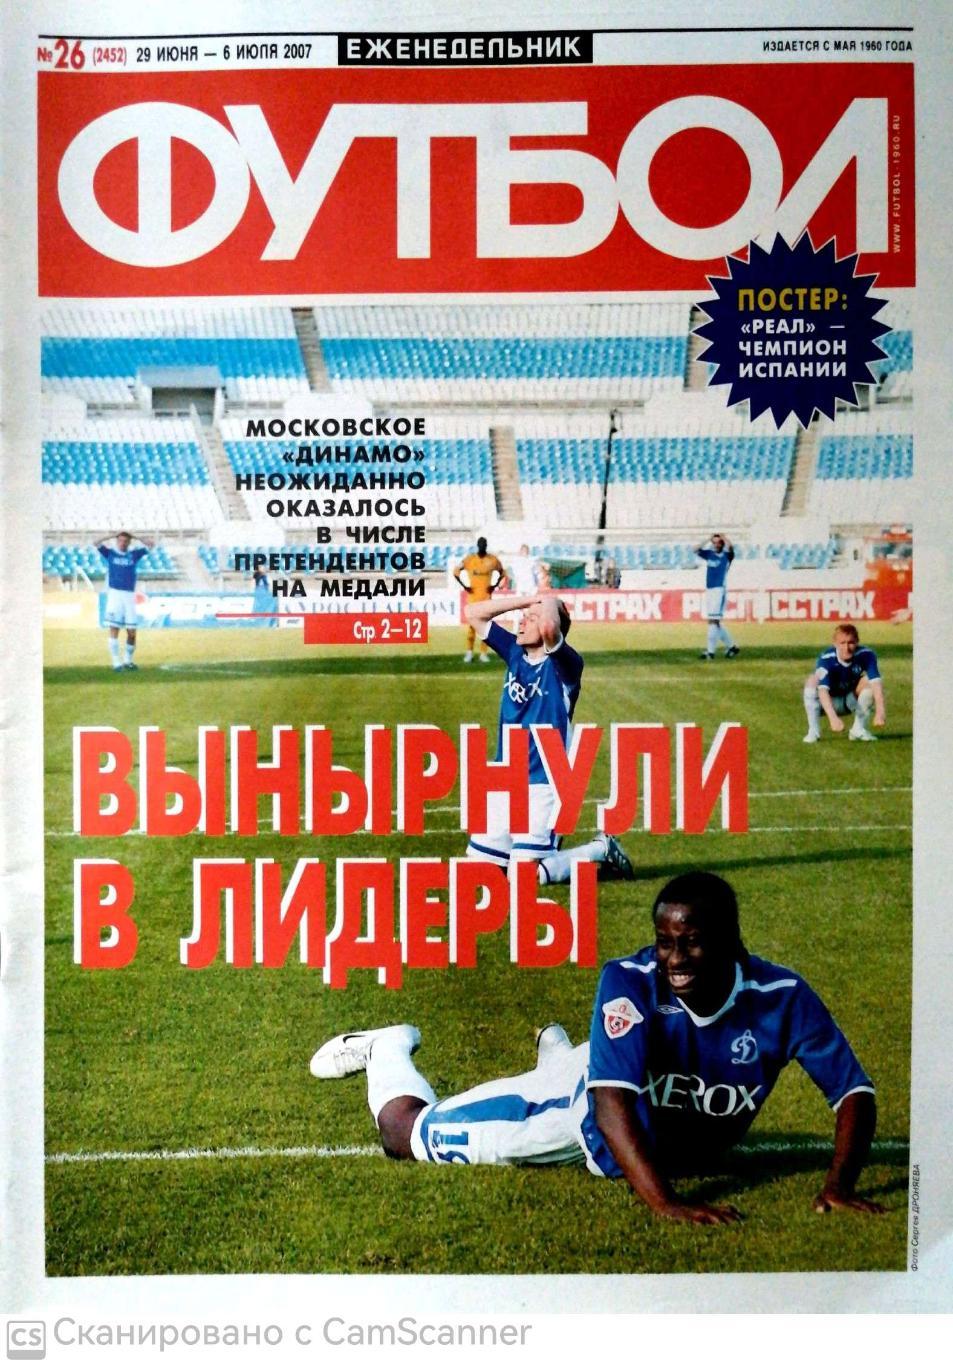 Еженедельник «Футбол» (Москва). 2007 год. №26 постер реал мадрид